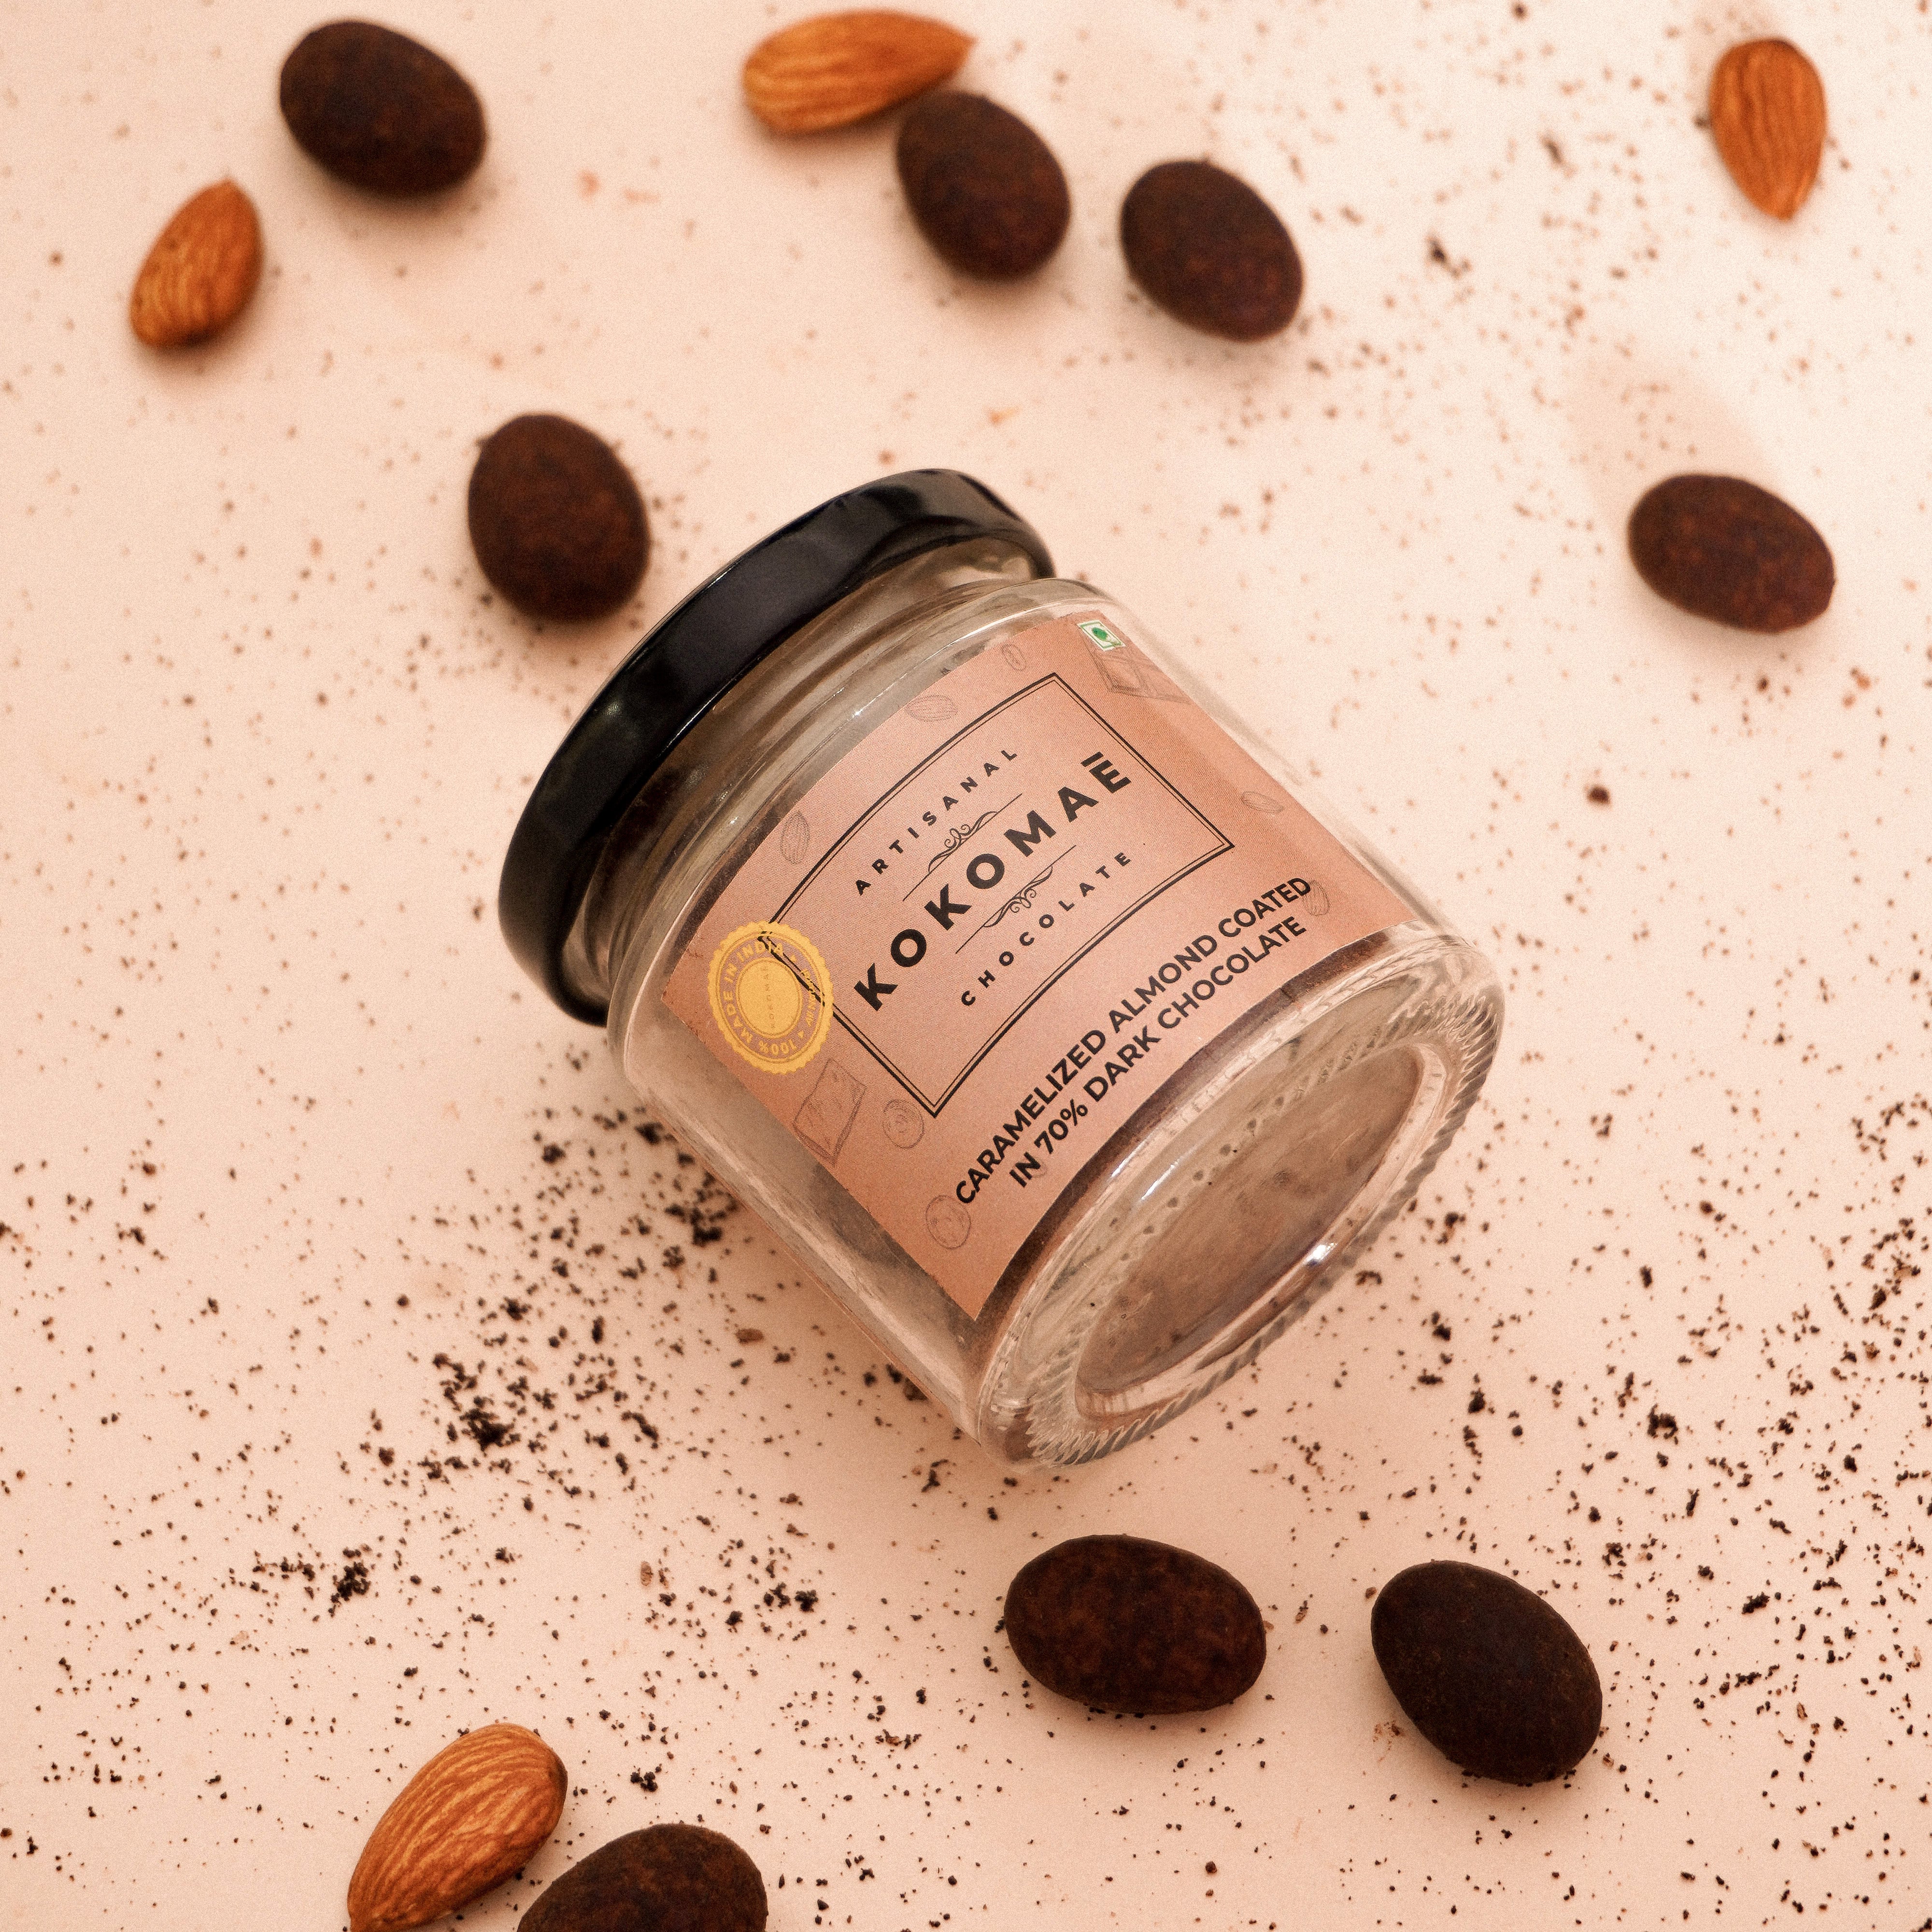 Kokomaē Caramelized Almonds Coated in 70% Dark Chocolate